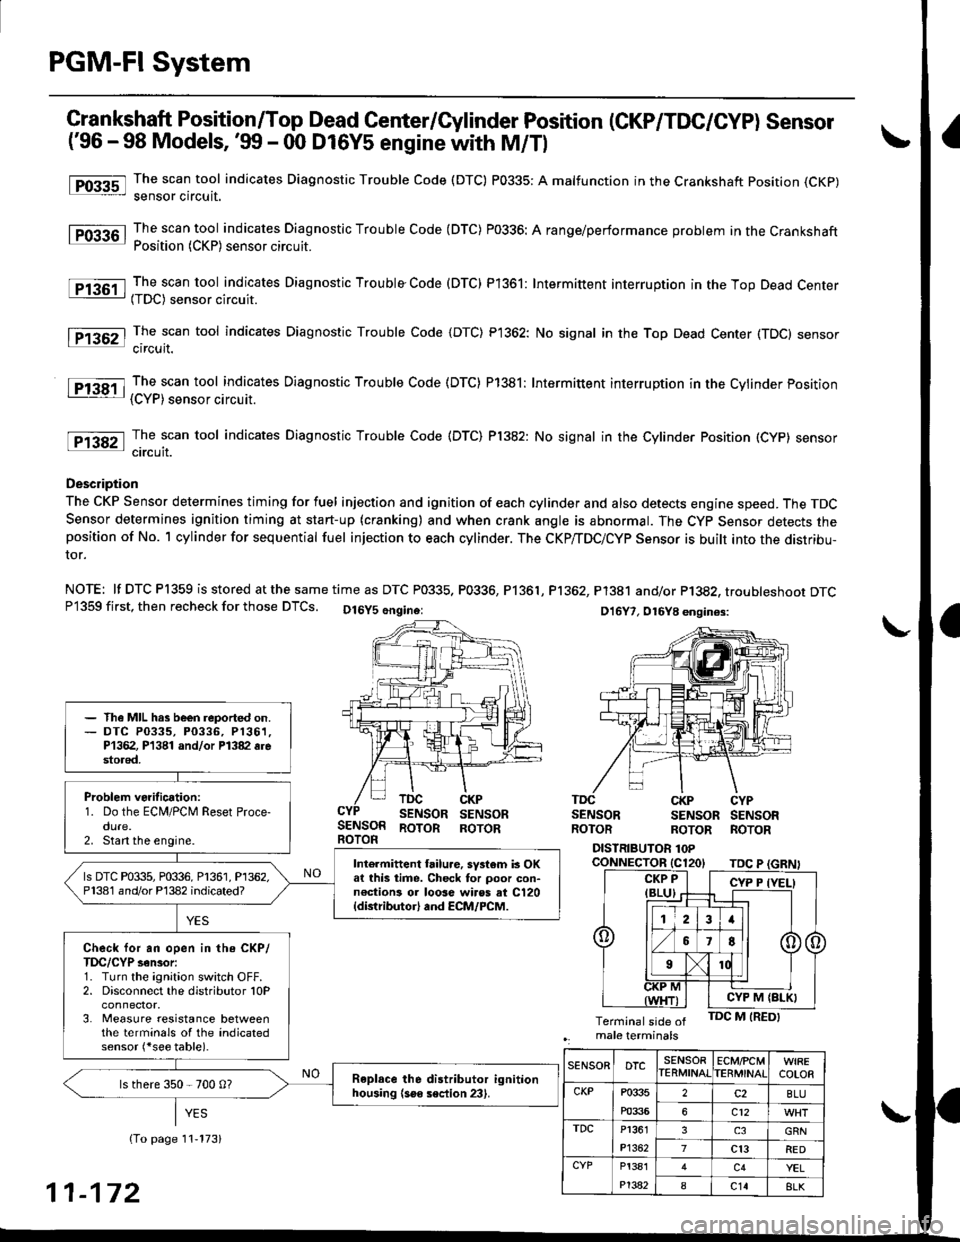 HONDA CIVIC 1997 6.G Workshop Manual PGM-FI System
tFos3sl
tFffi6l
tPr361 I
fPfi62l
fFr38il
tF13s2-l
Crankshaft Position/Top Dead Genter/Gylinder Position (CKP/TDC/CYP) Sensor
(96 - 98 Models, !n - 00 D16Y5 engine with M/Tl
The scan to